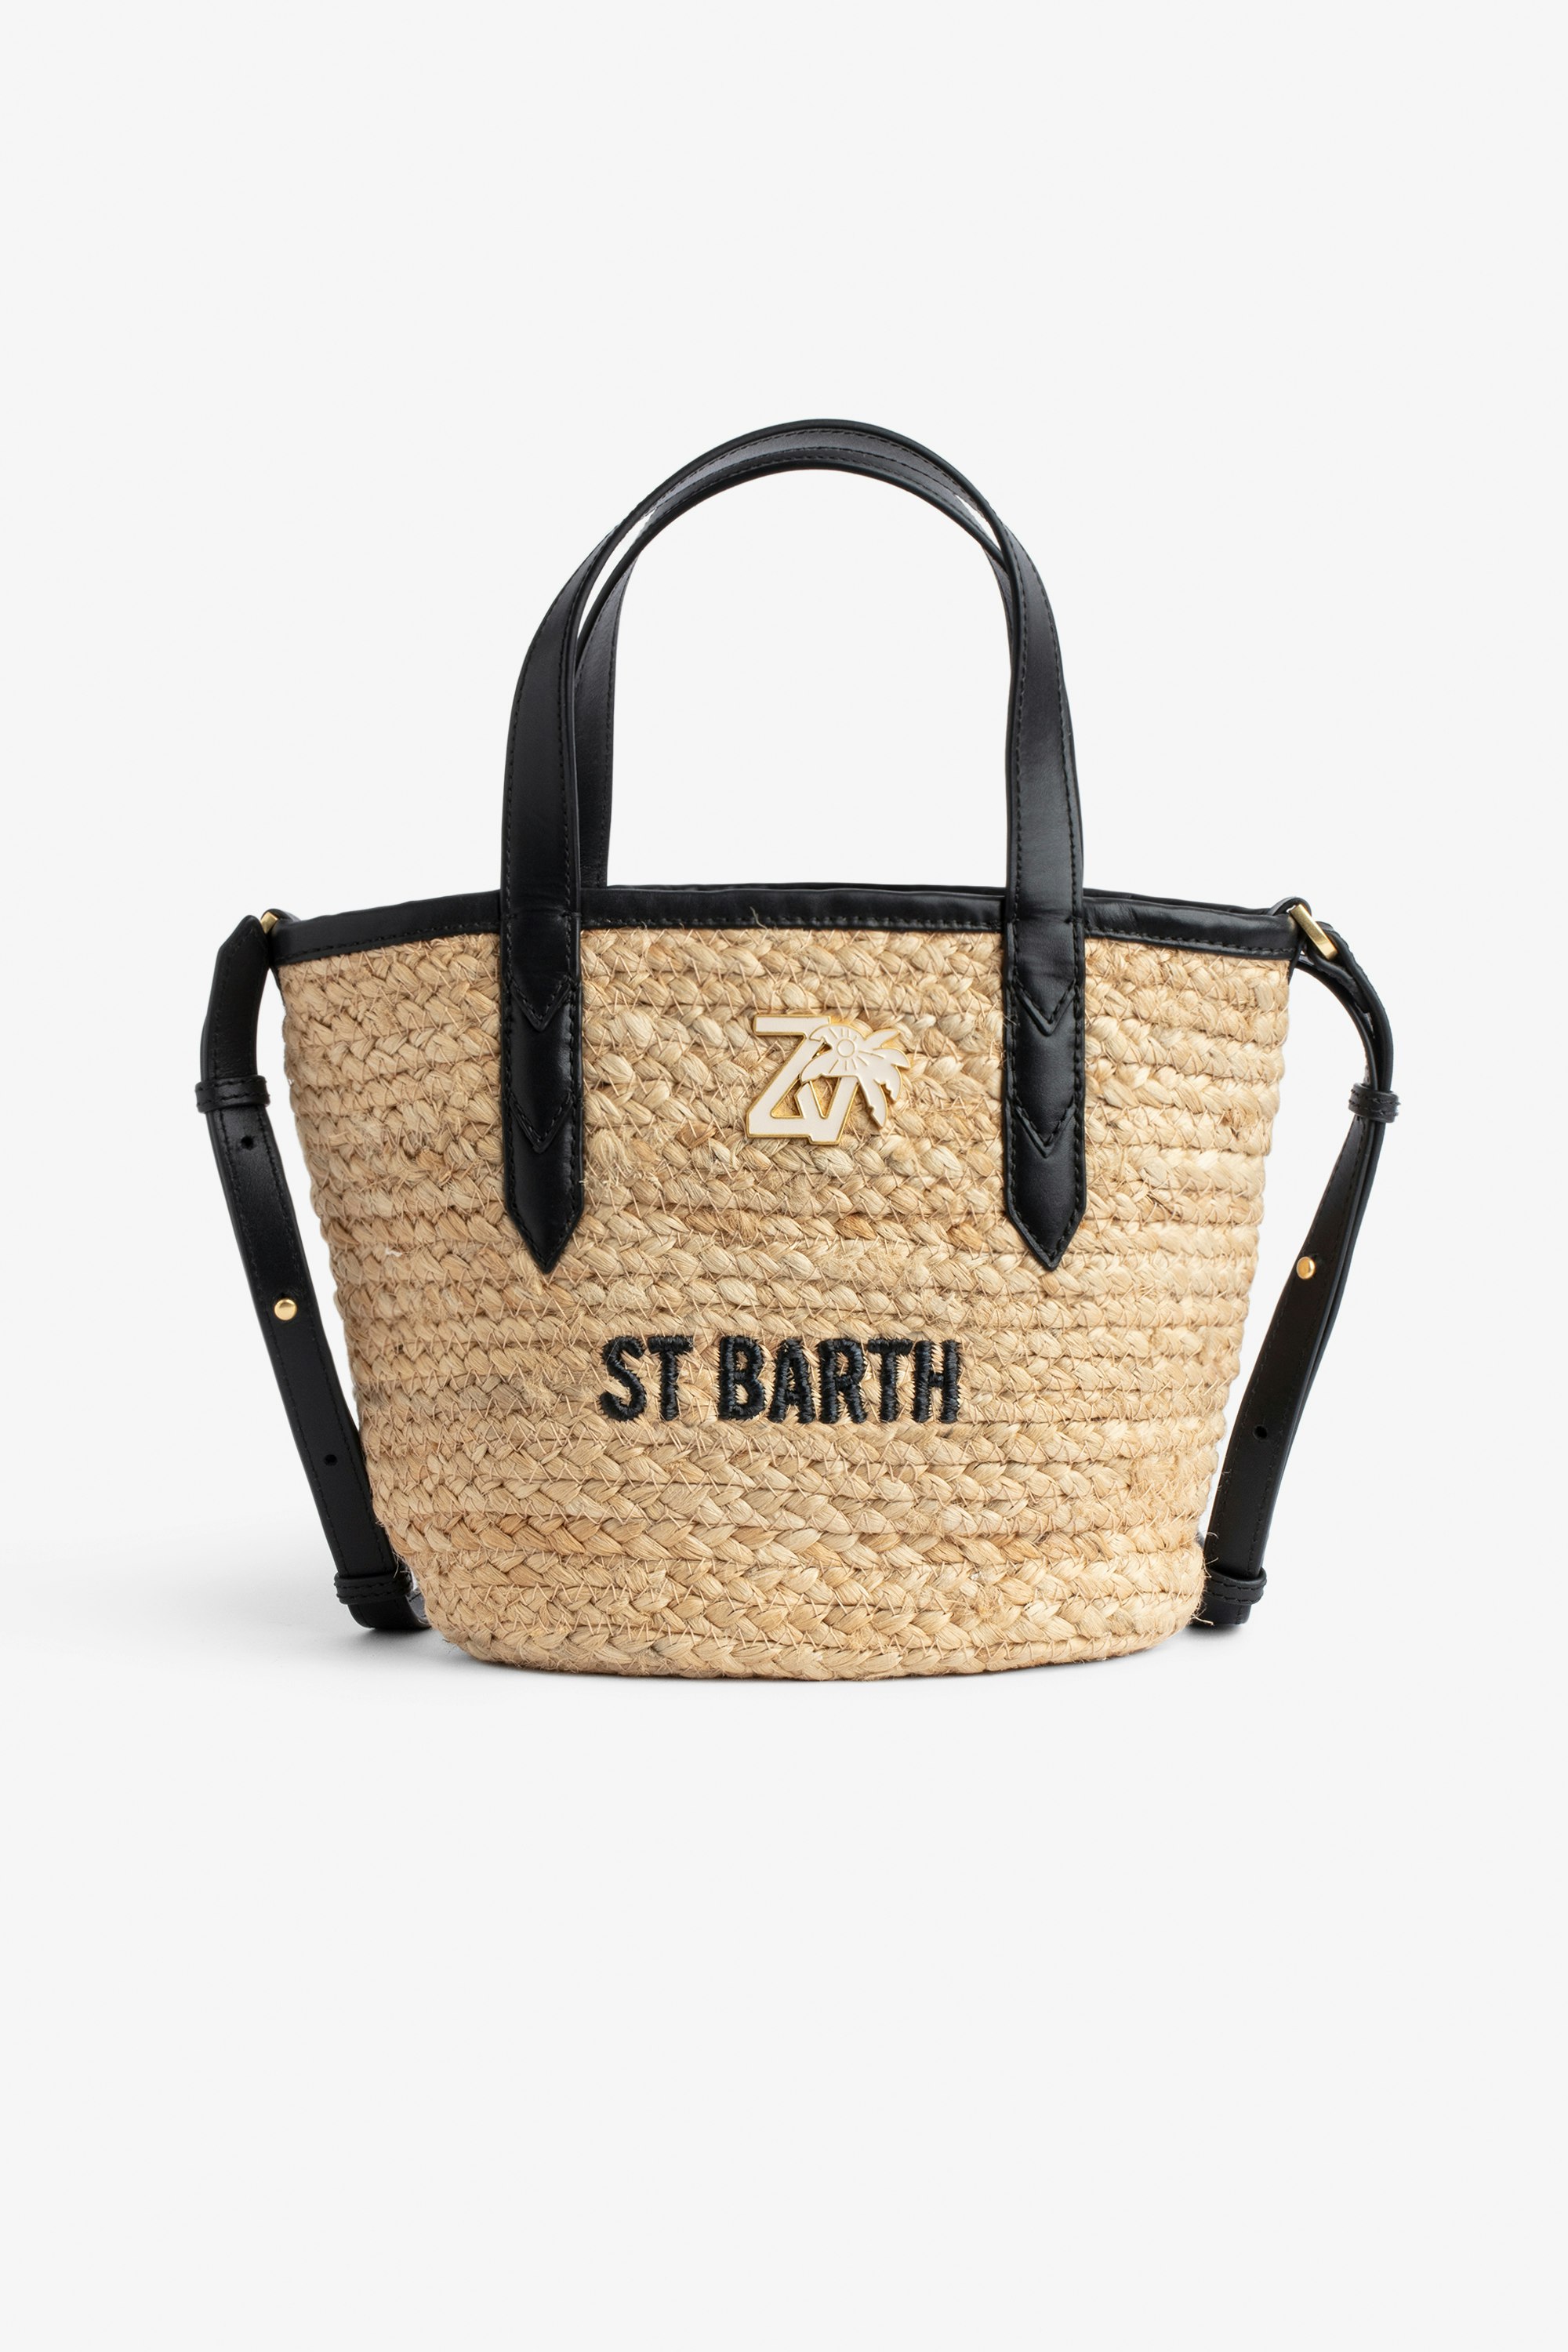 Le Baby Beach バッグ ブラックレザーショルダーストラップ付きストローバッグ、「St Barth」刺繍と「ZV」のチャーム付属 レディース